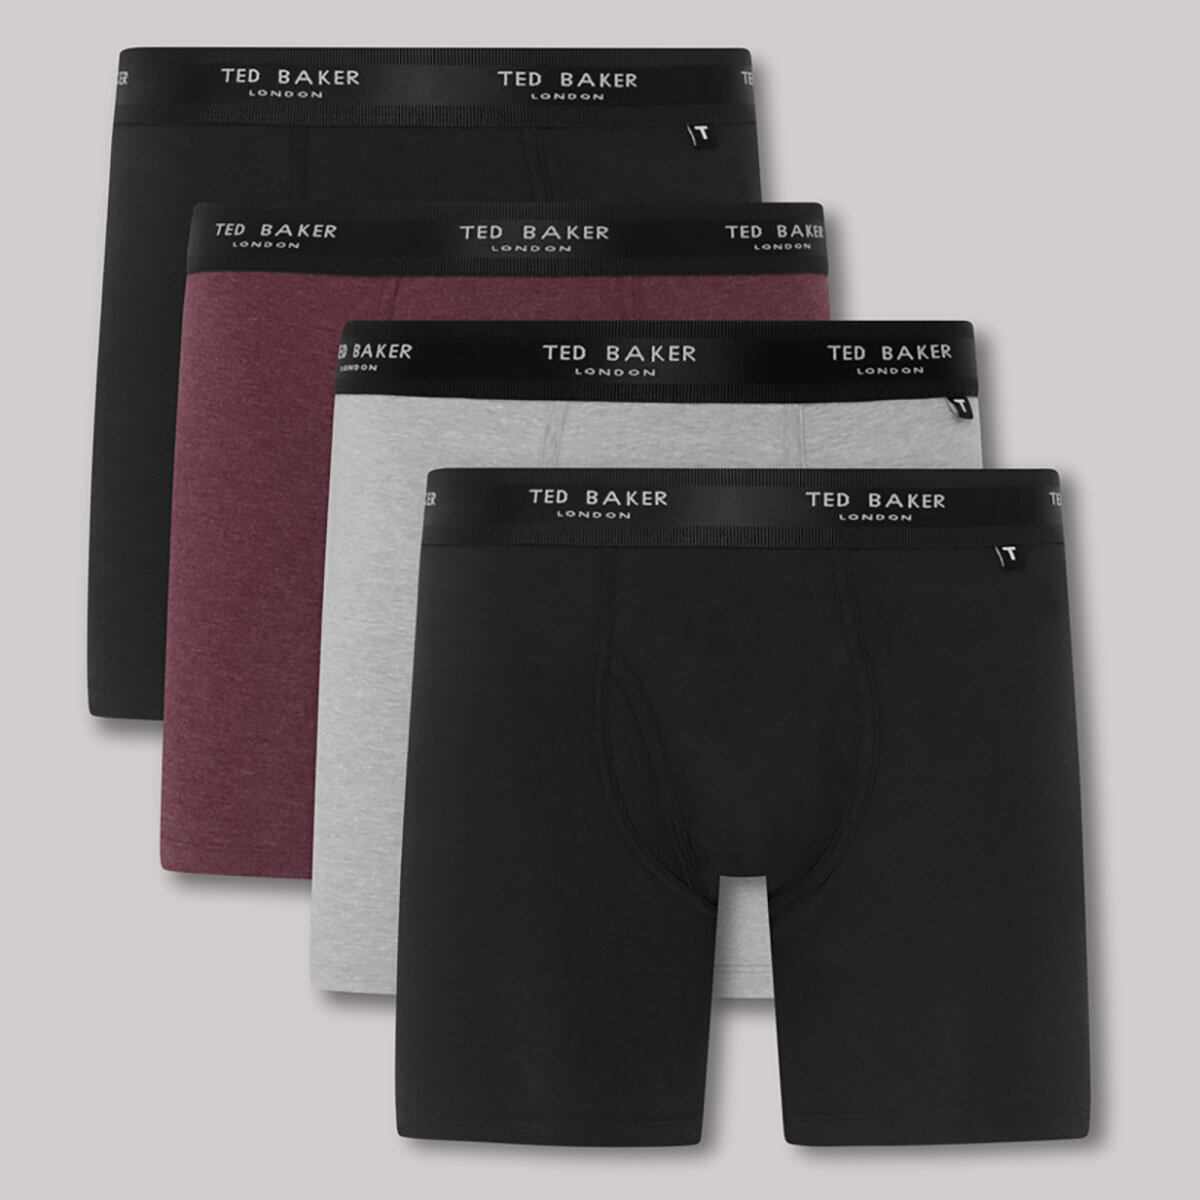 Ted Baker Men's Boxer Shorts, 4 Pack in Black